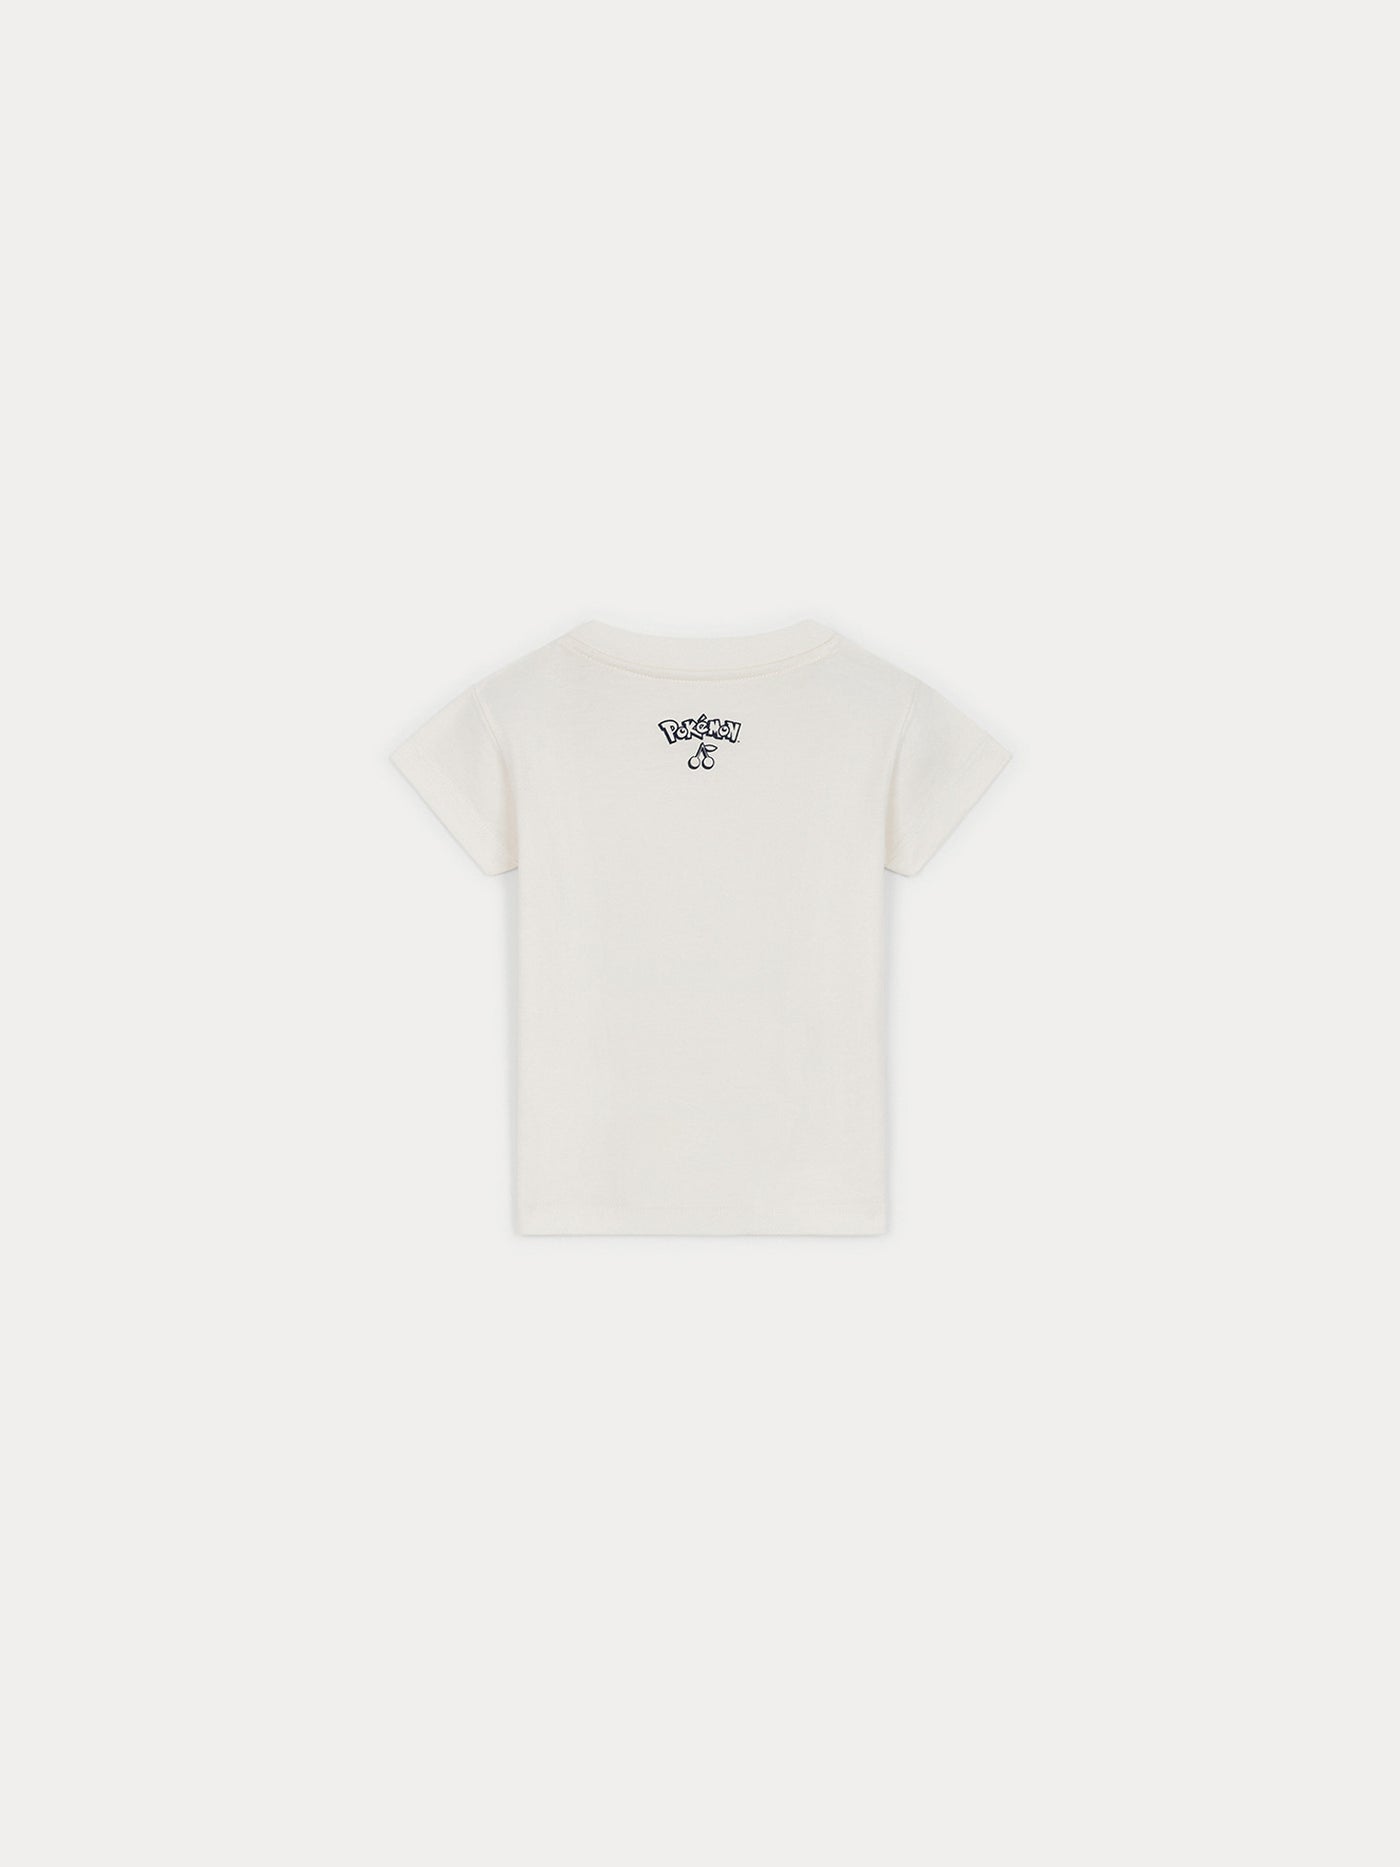 T-shirt Tom Bonpoint × Pokémon